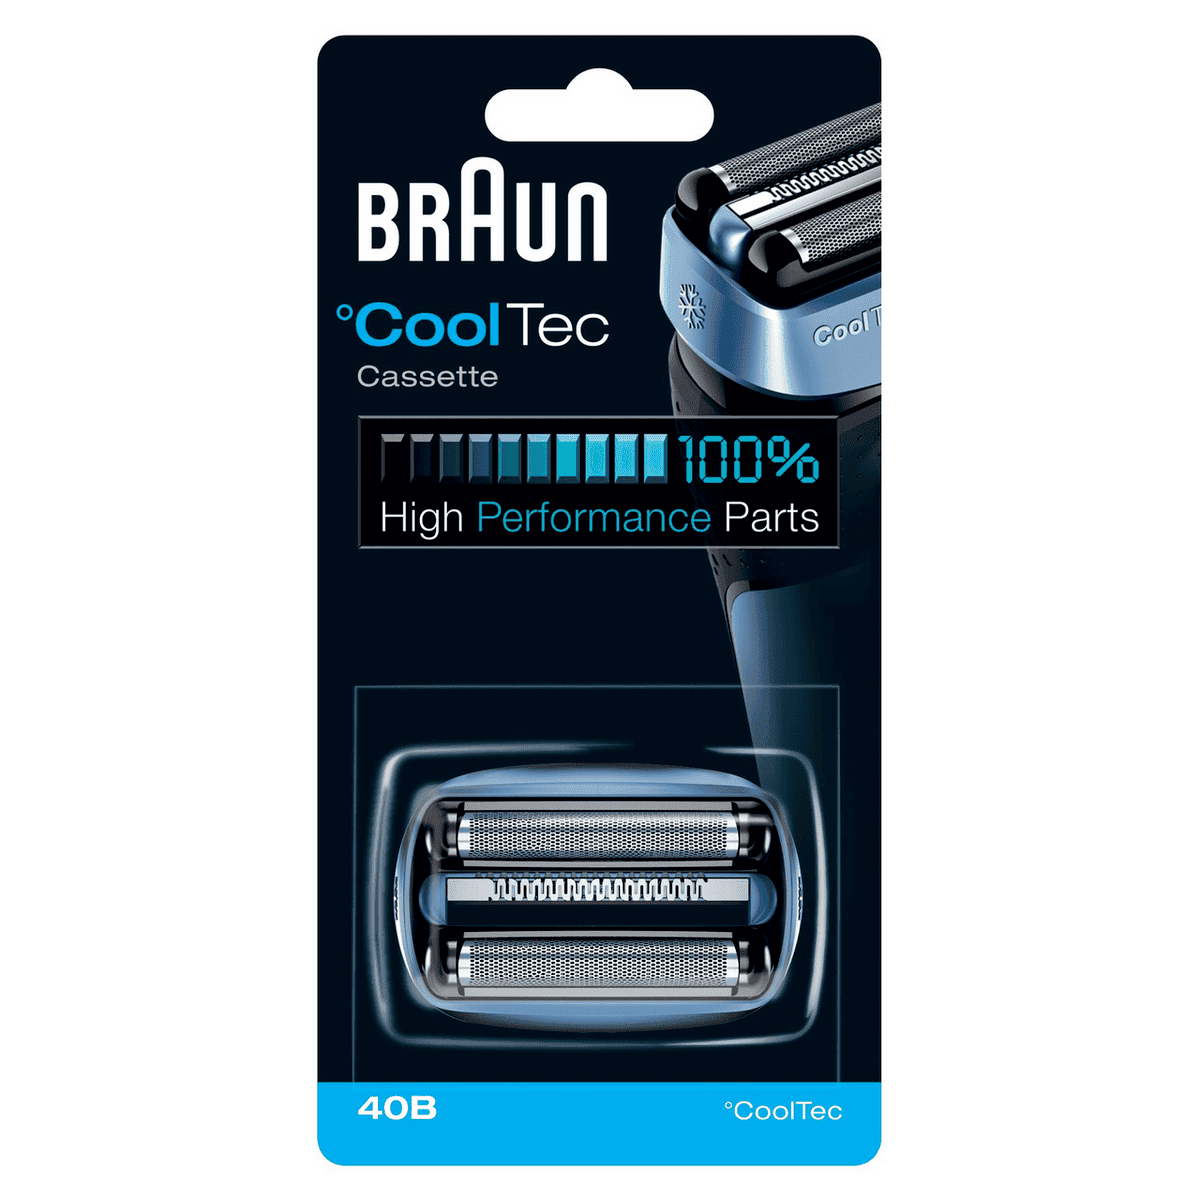 Braun Razor blade 40BV / 2082 4200 Black